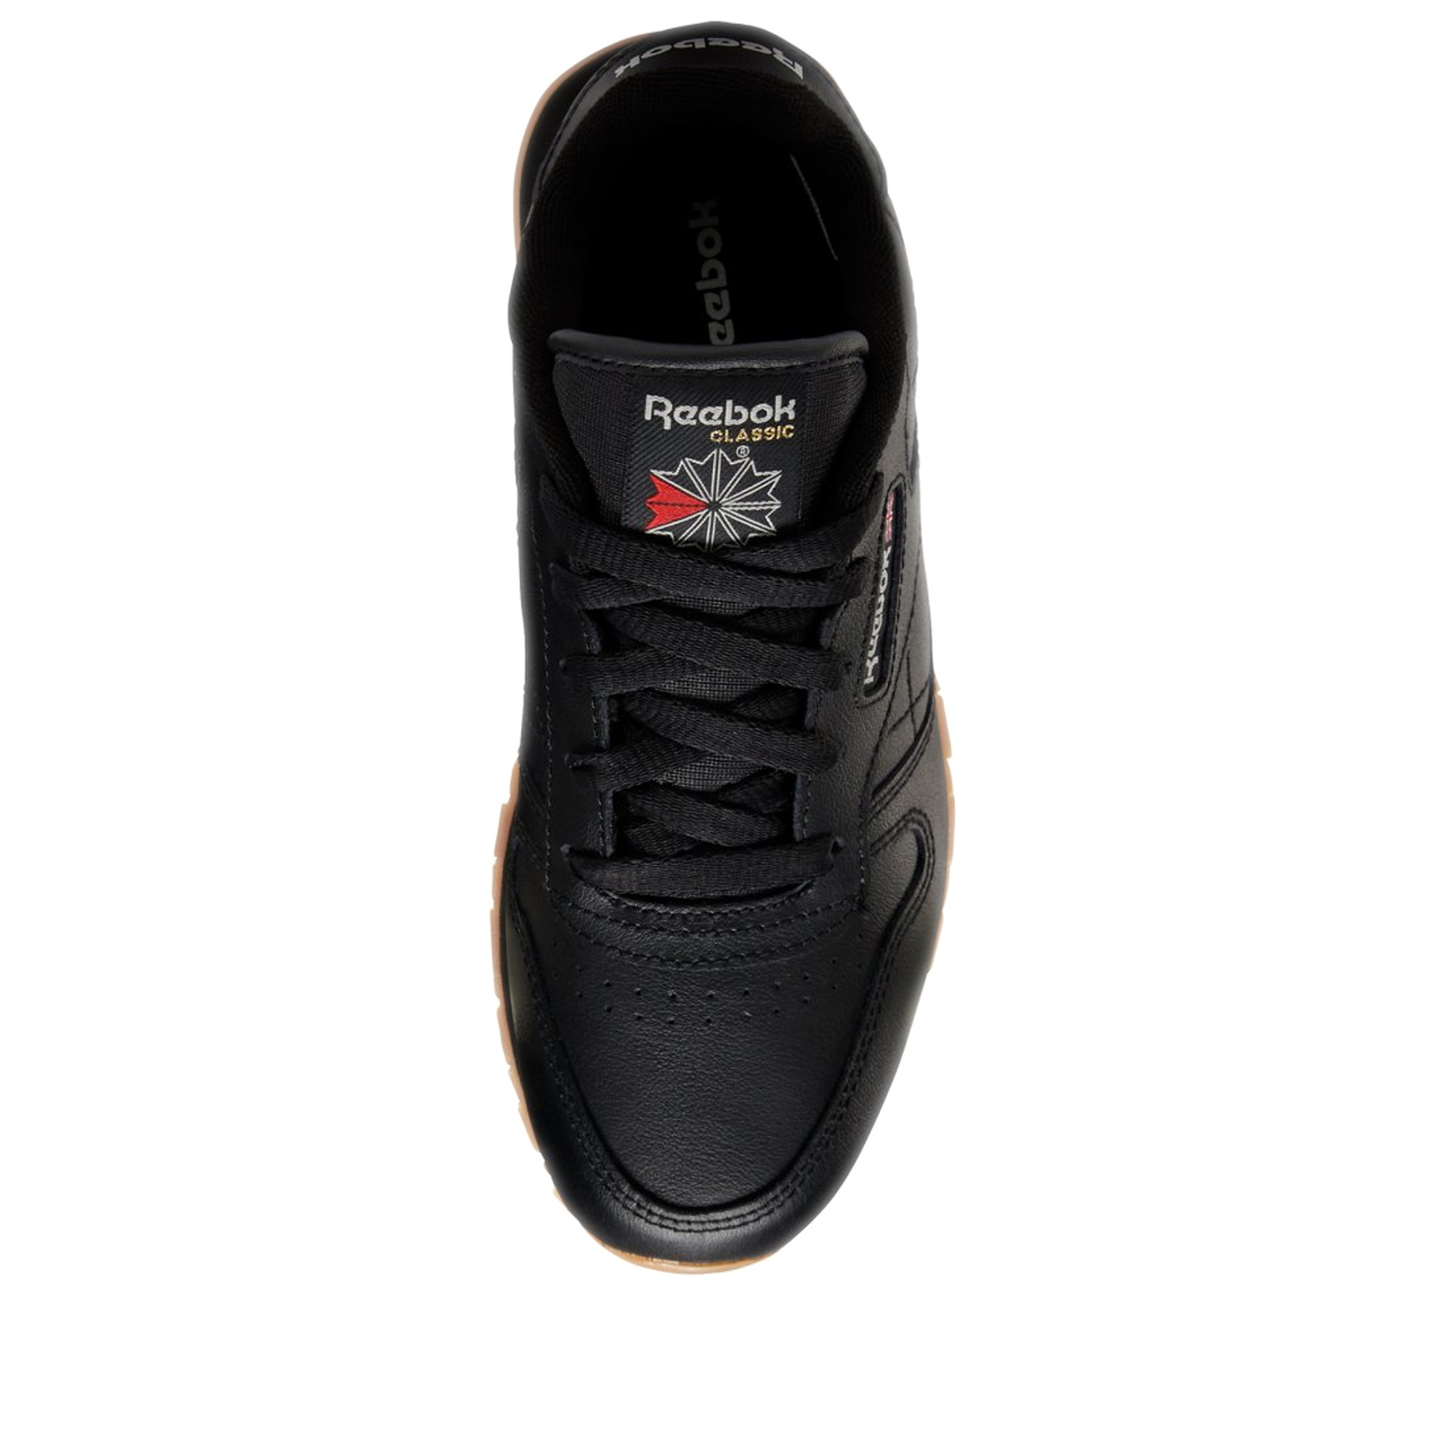 Pre School Reebok Classic Leather Shoes - Black/ Gum